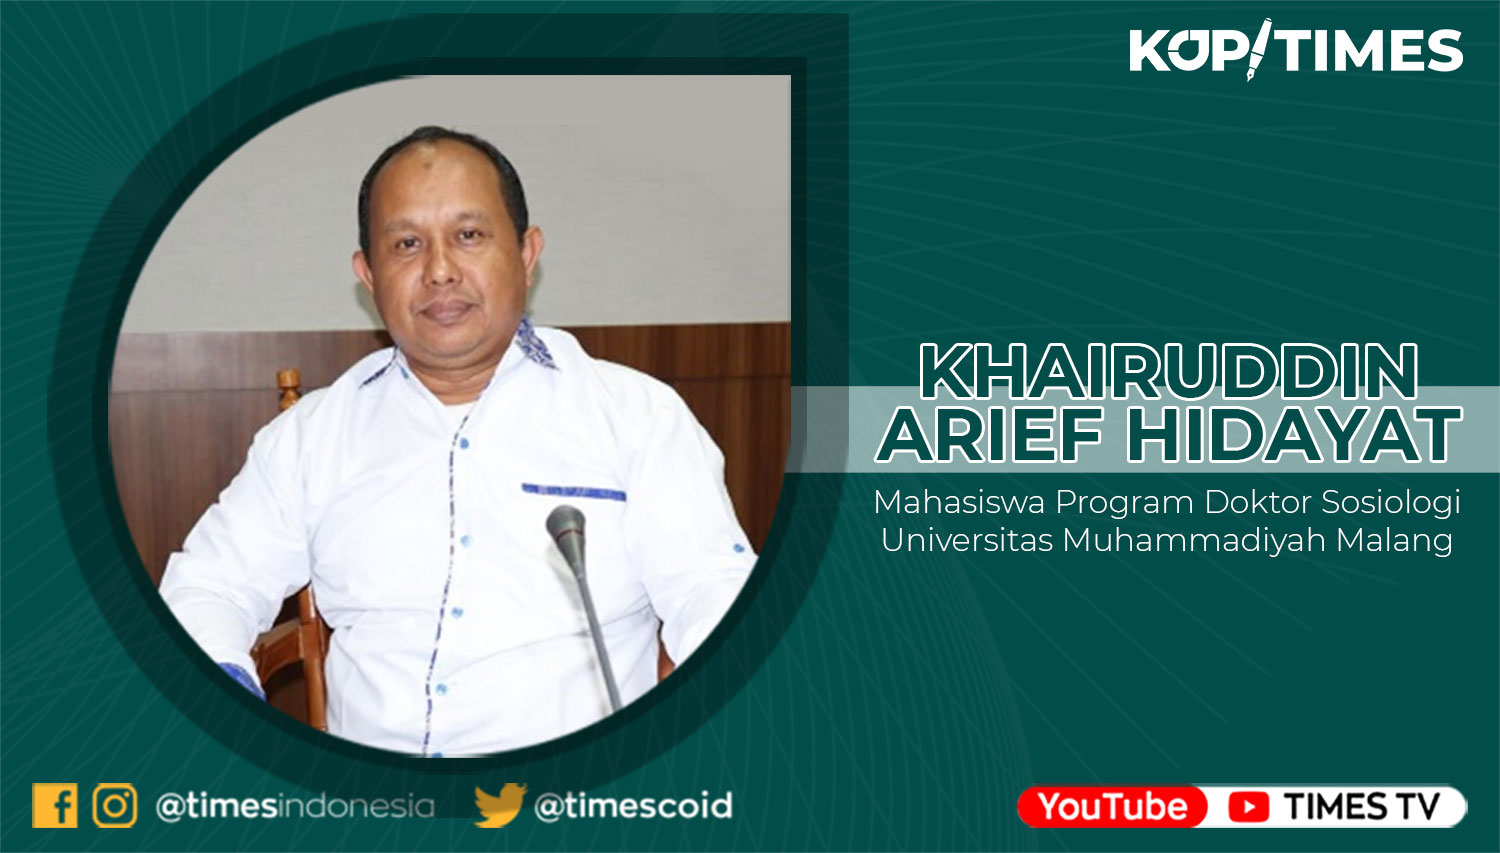 Khairuddin Arief Hidayat, Mahasiswa Program Doktor Sosiologi Universitas Muhammadiyah Malang.